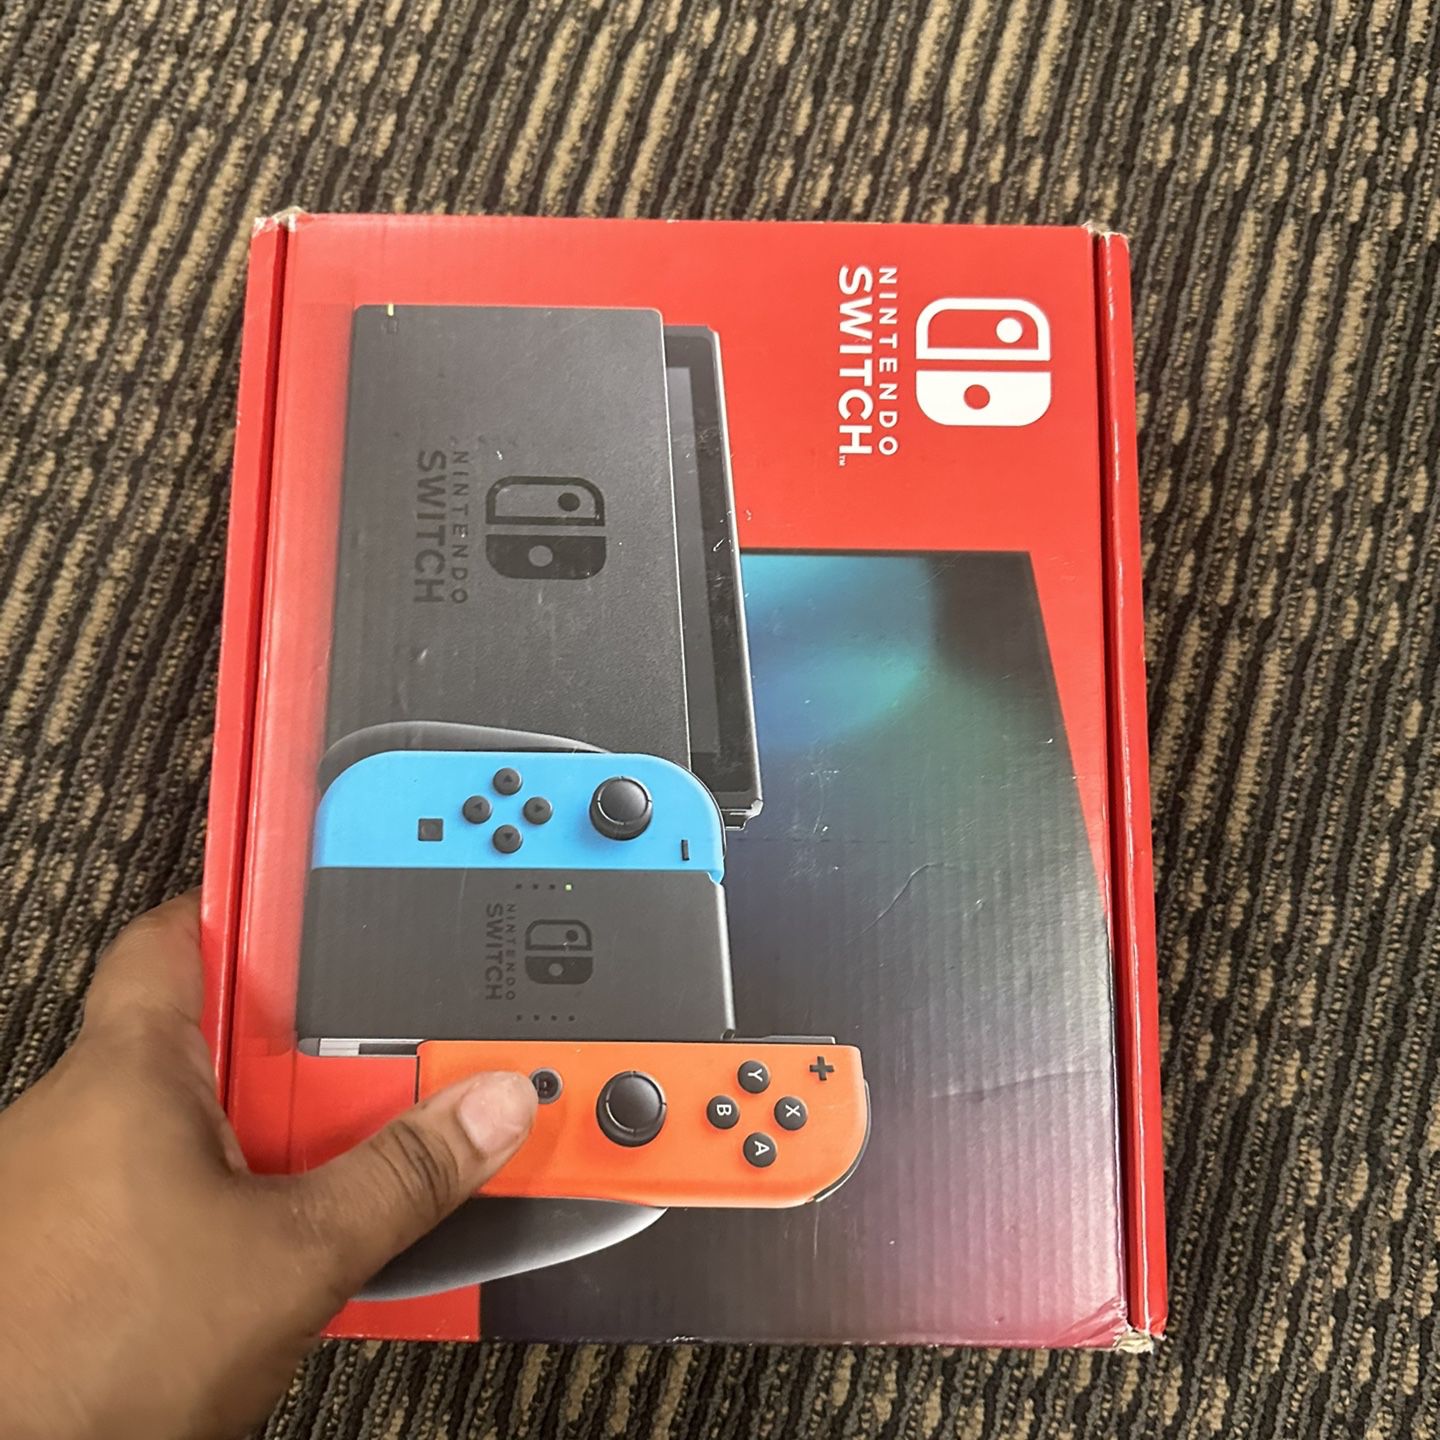 Nintendo Switch Brand New